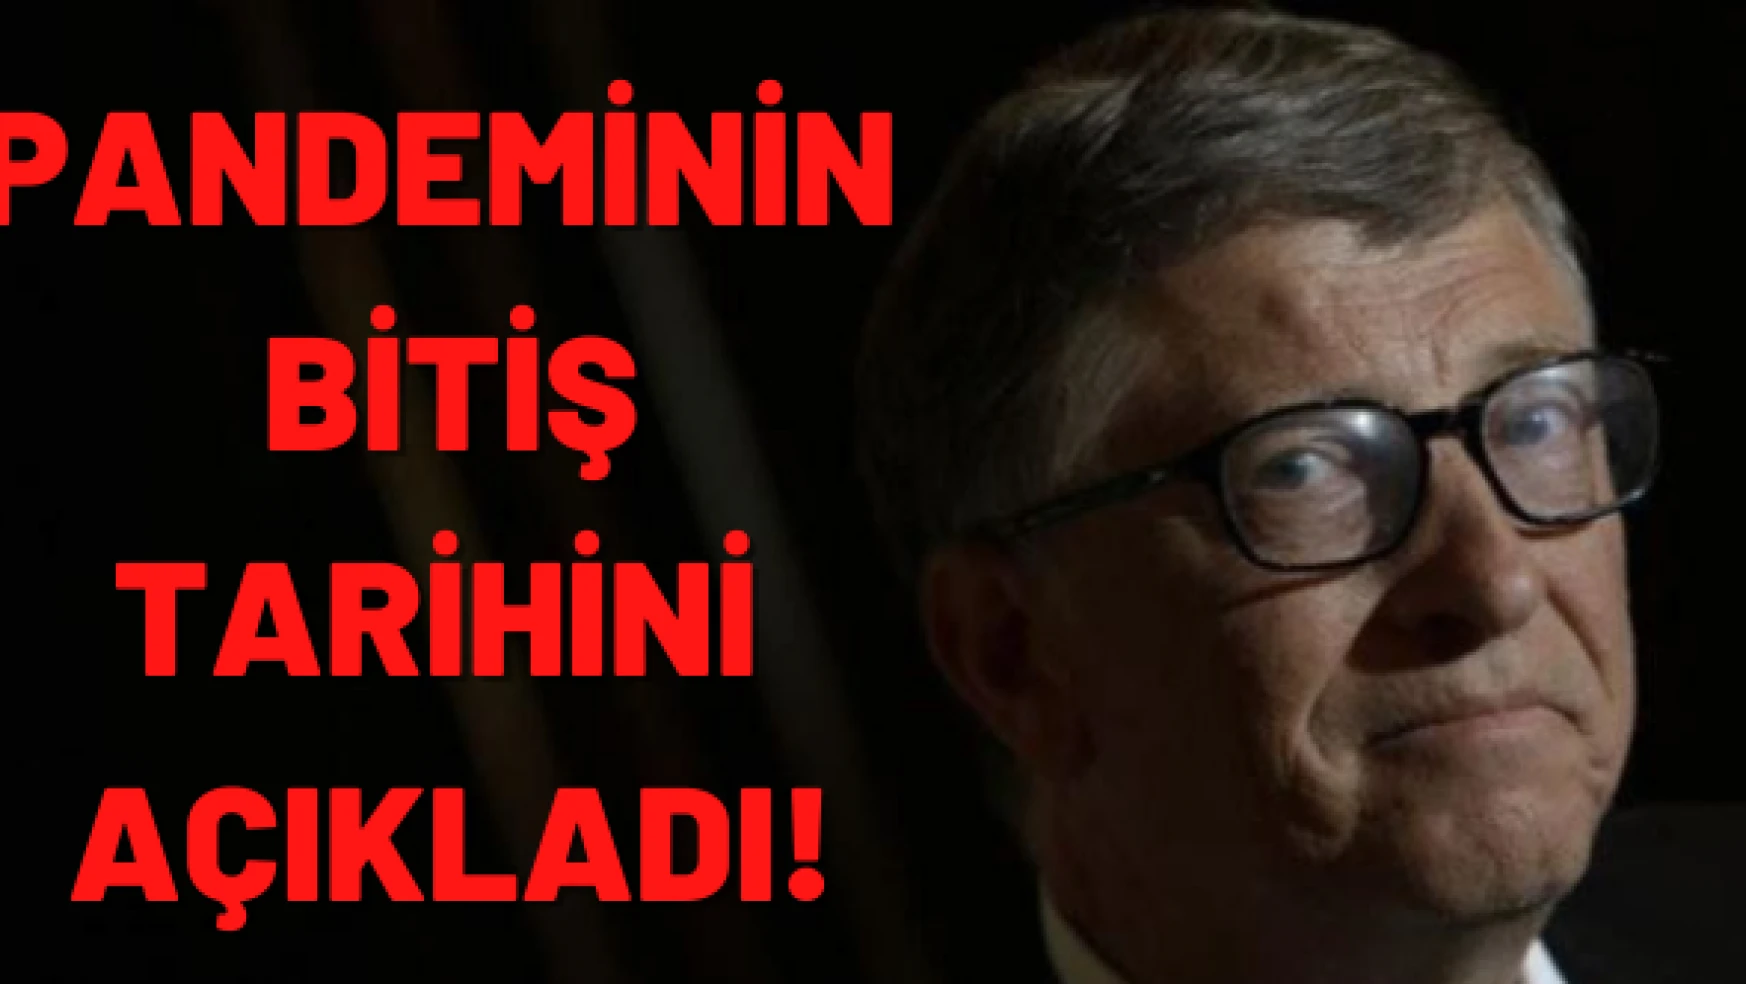  Bill Gates pandeminin bitiş tarihini duyurdu!